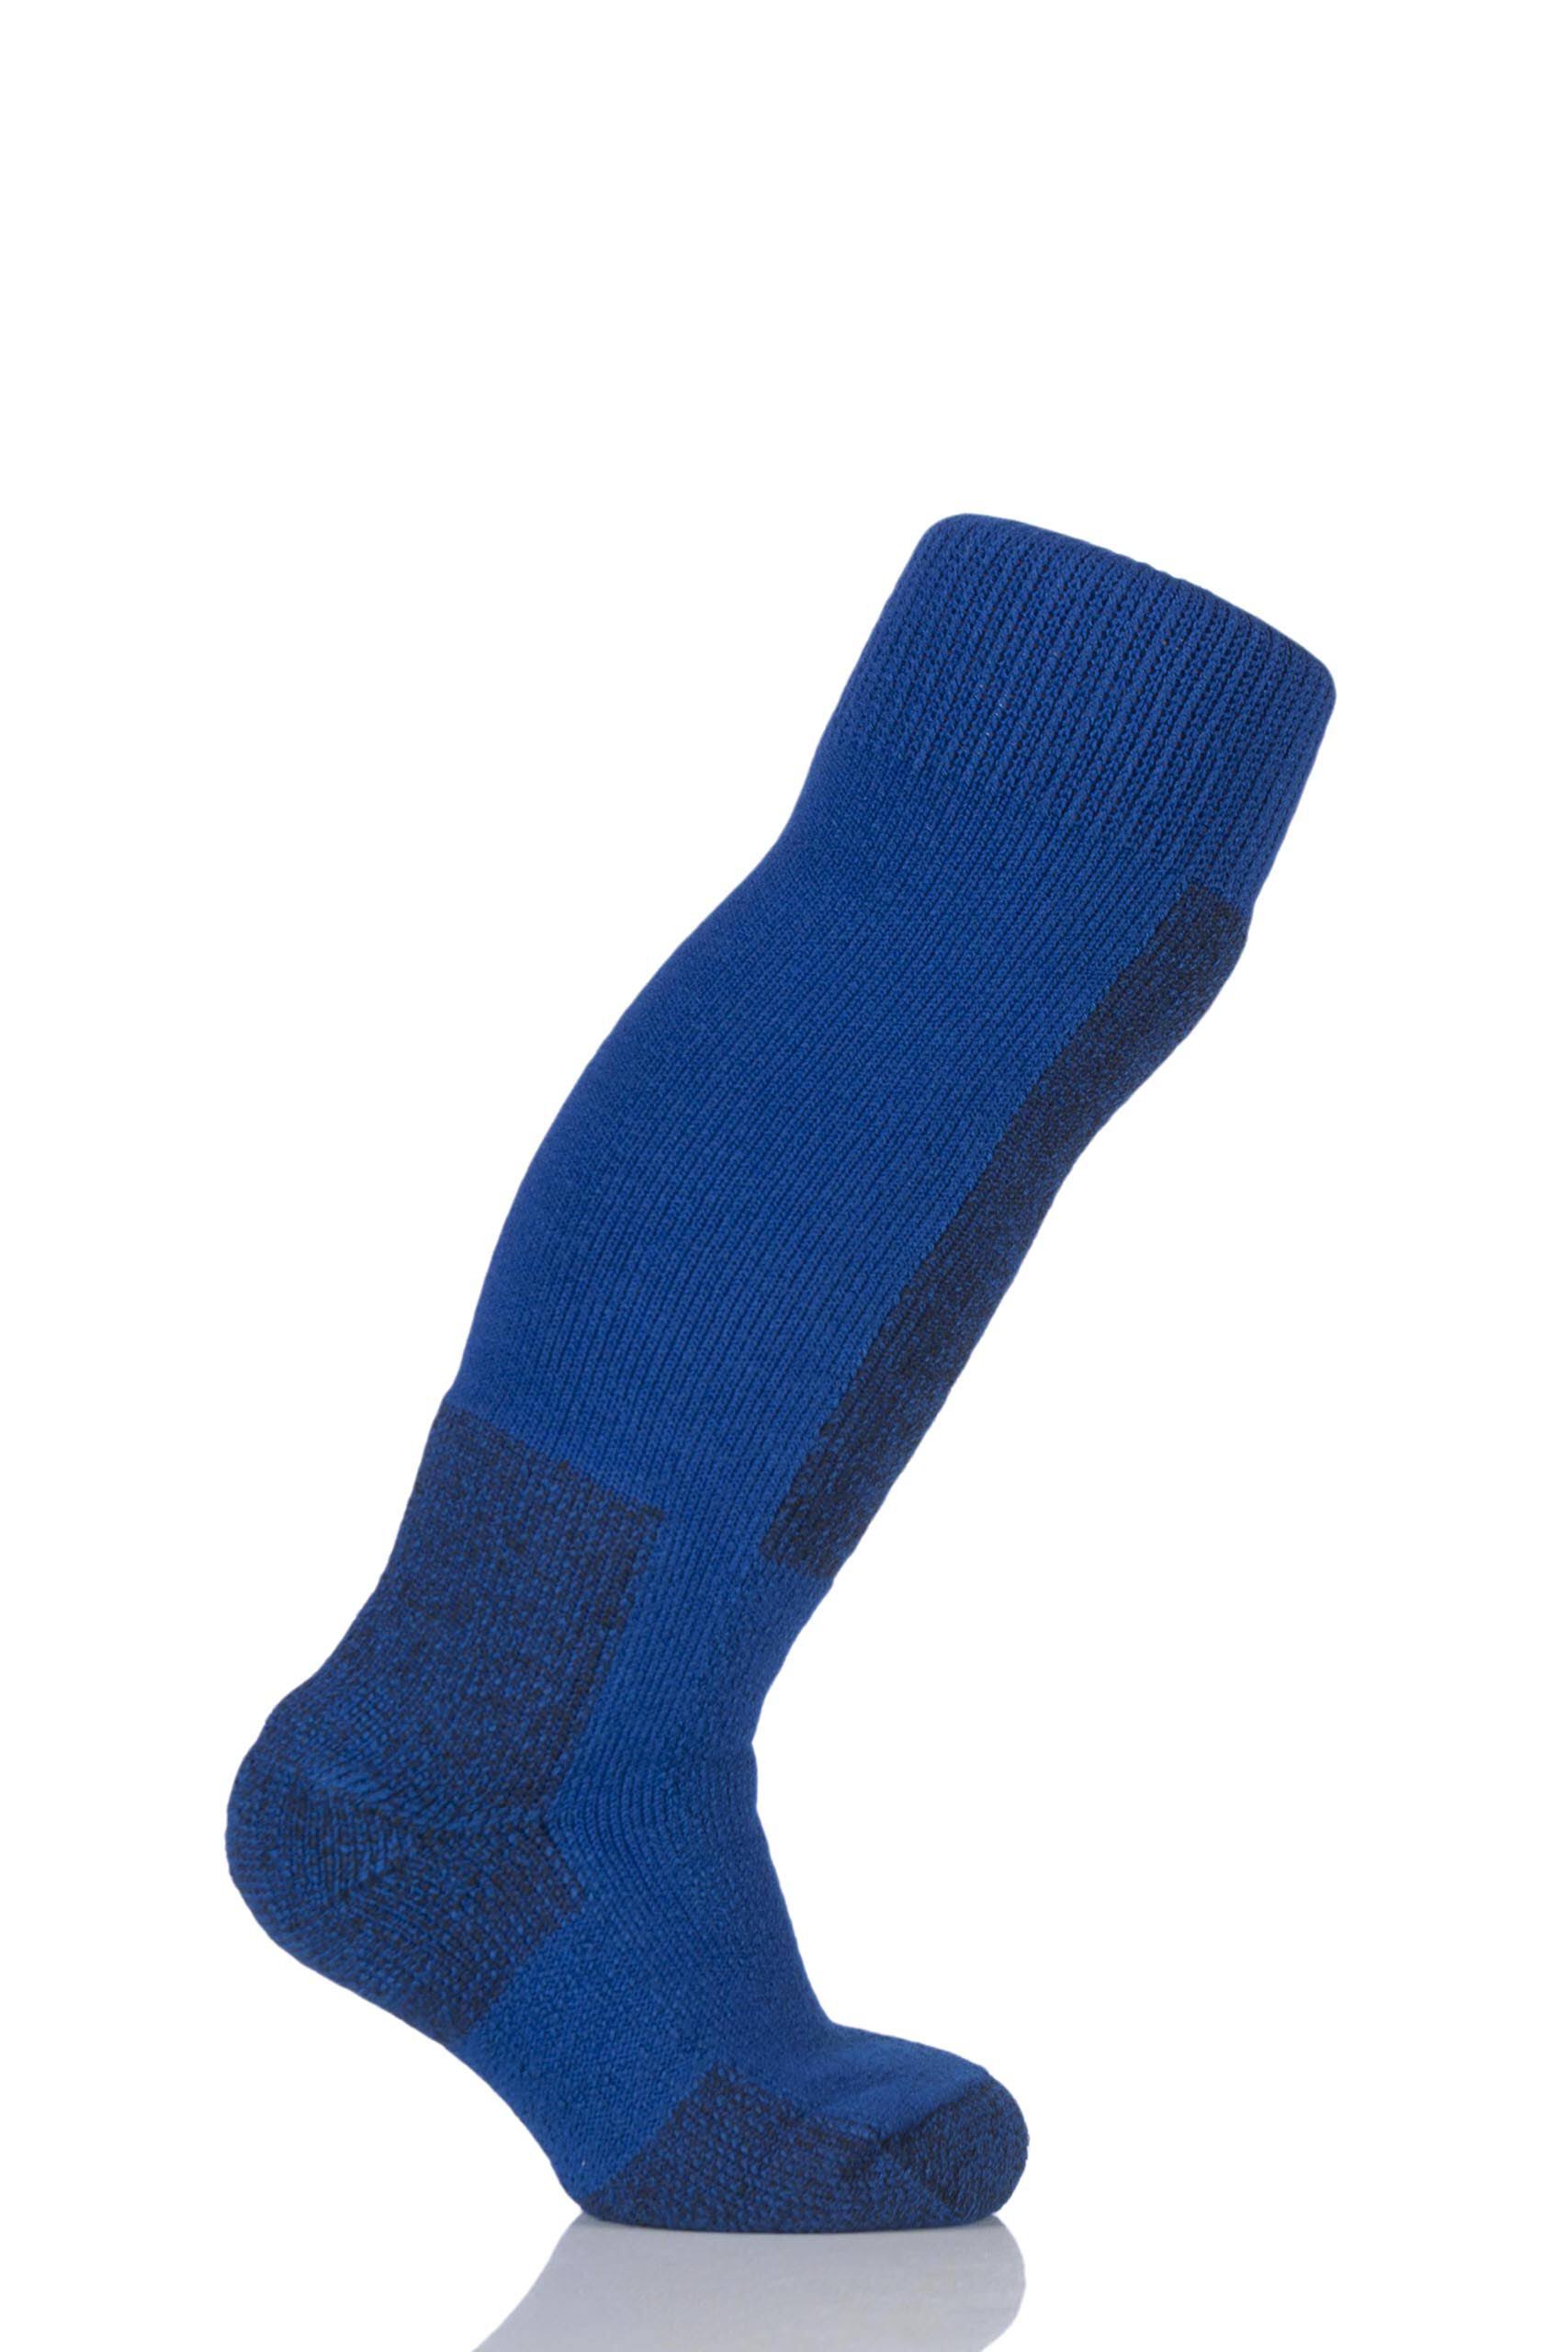 Thorlos Kids Ski Cushion Socks - Blue, Small